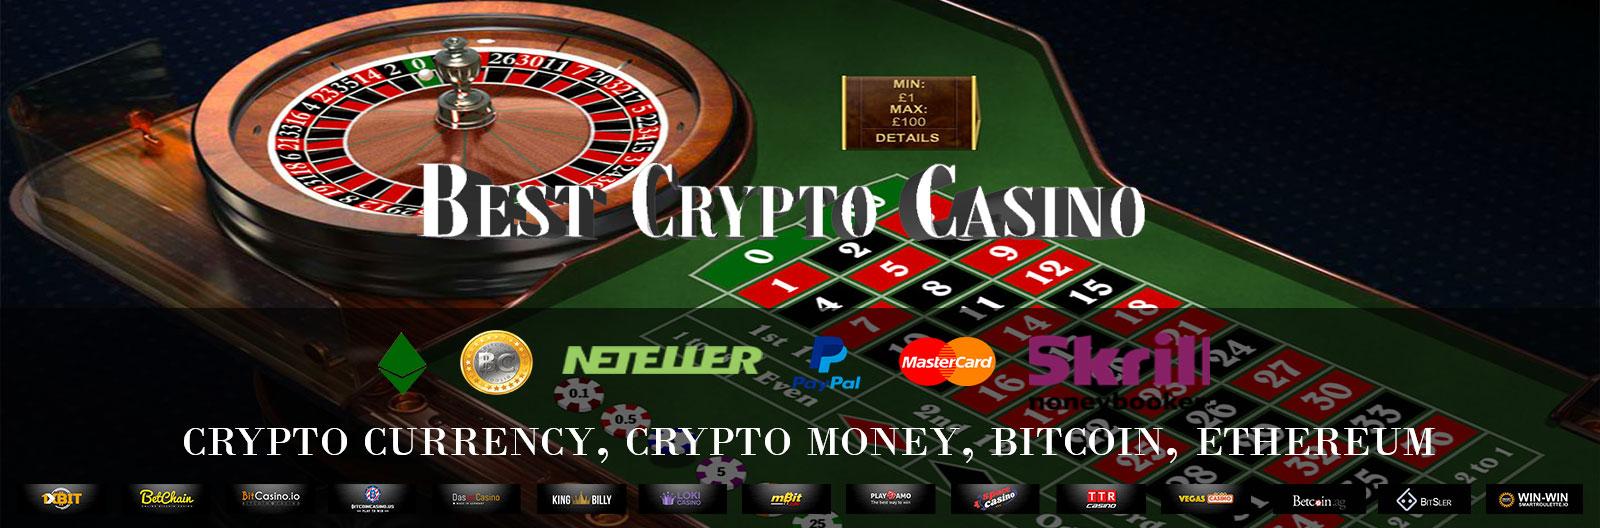 Best casino game to win money on bet9ja